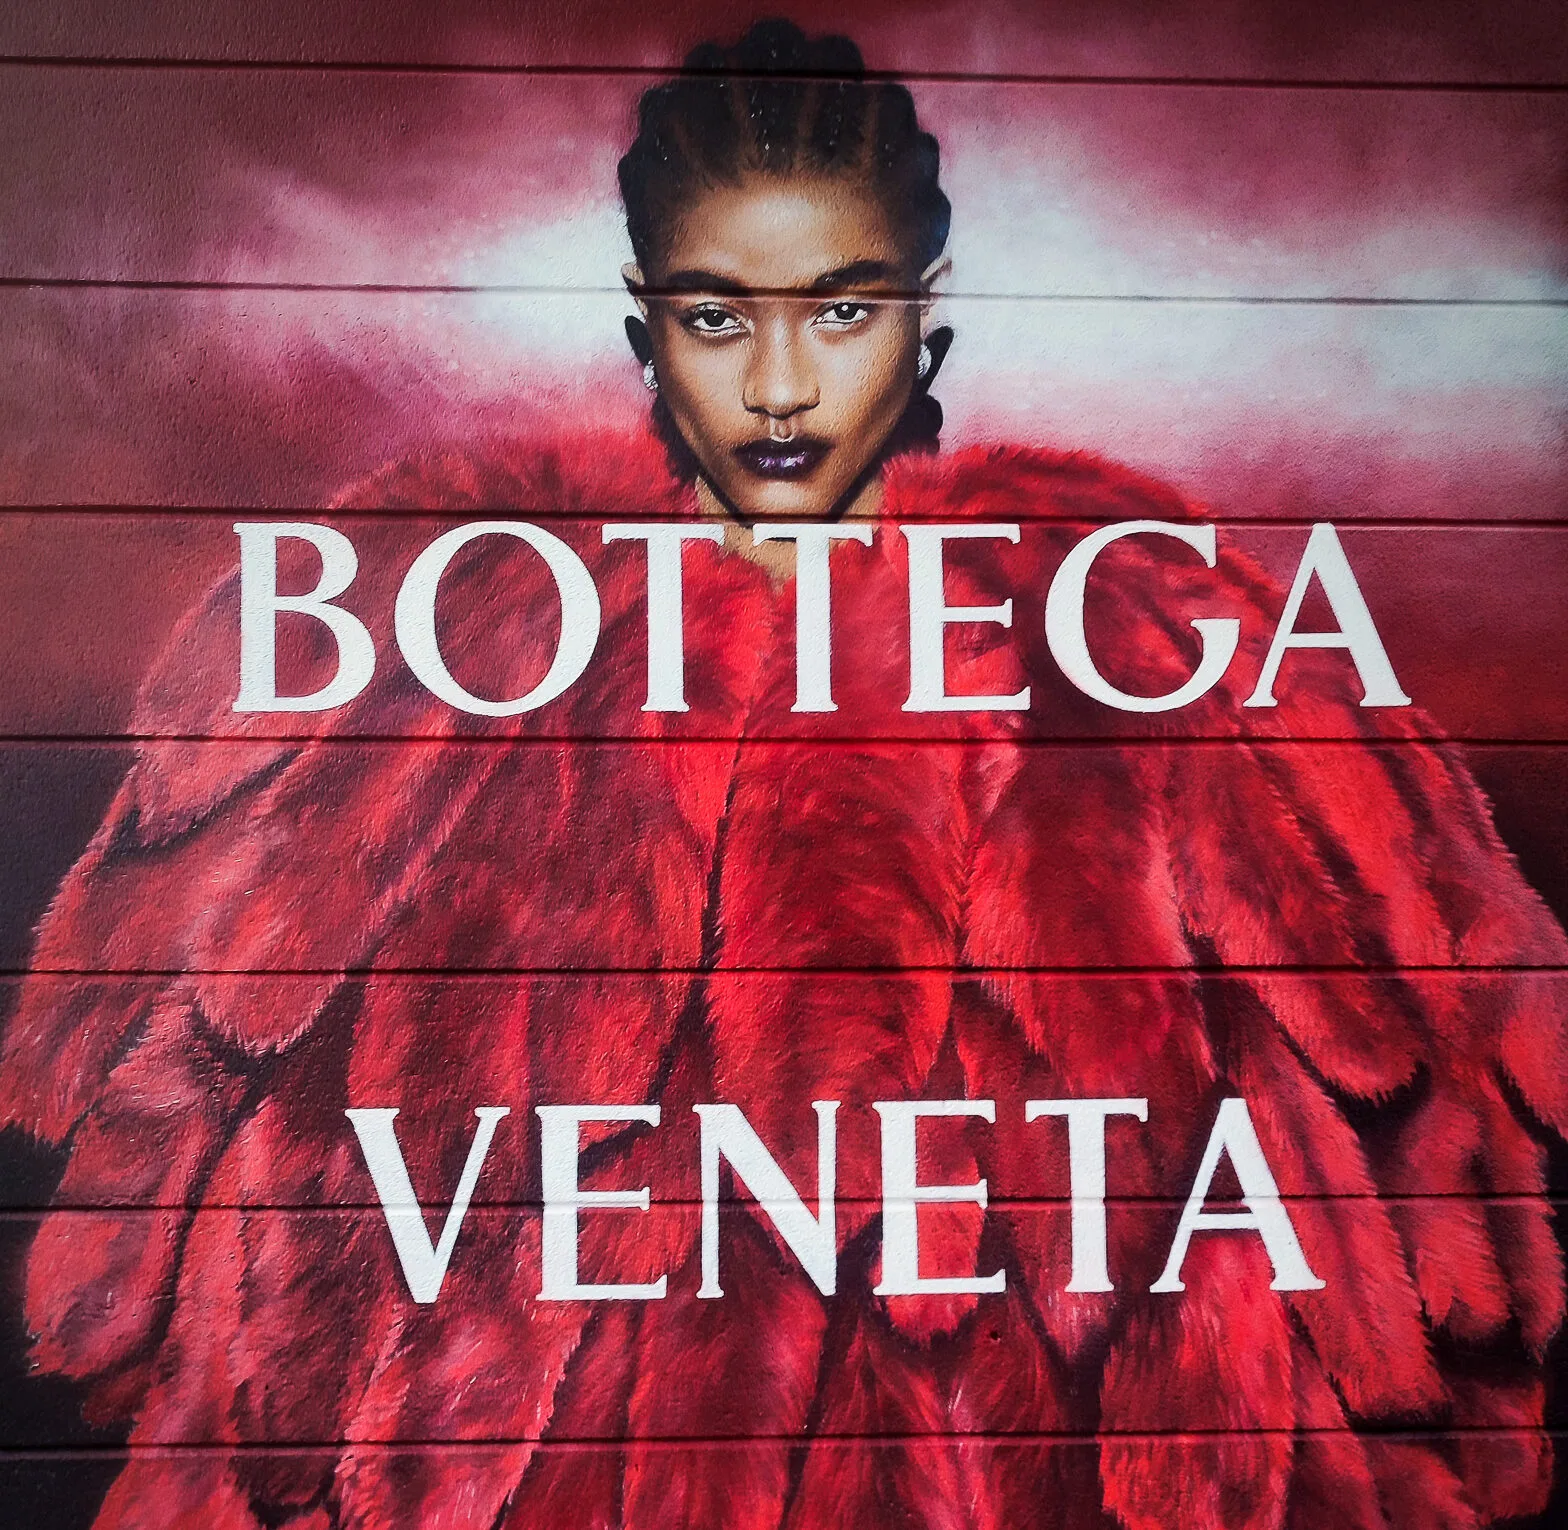 Bottega Veneta advertisement mural in London